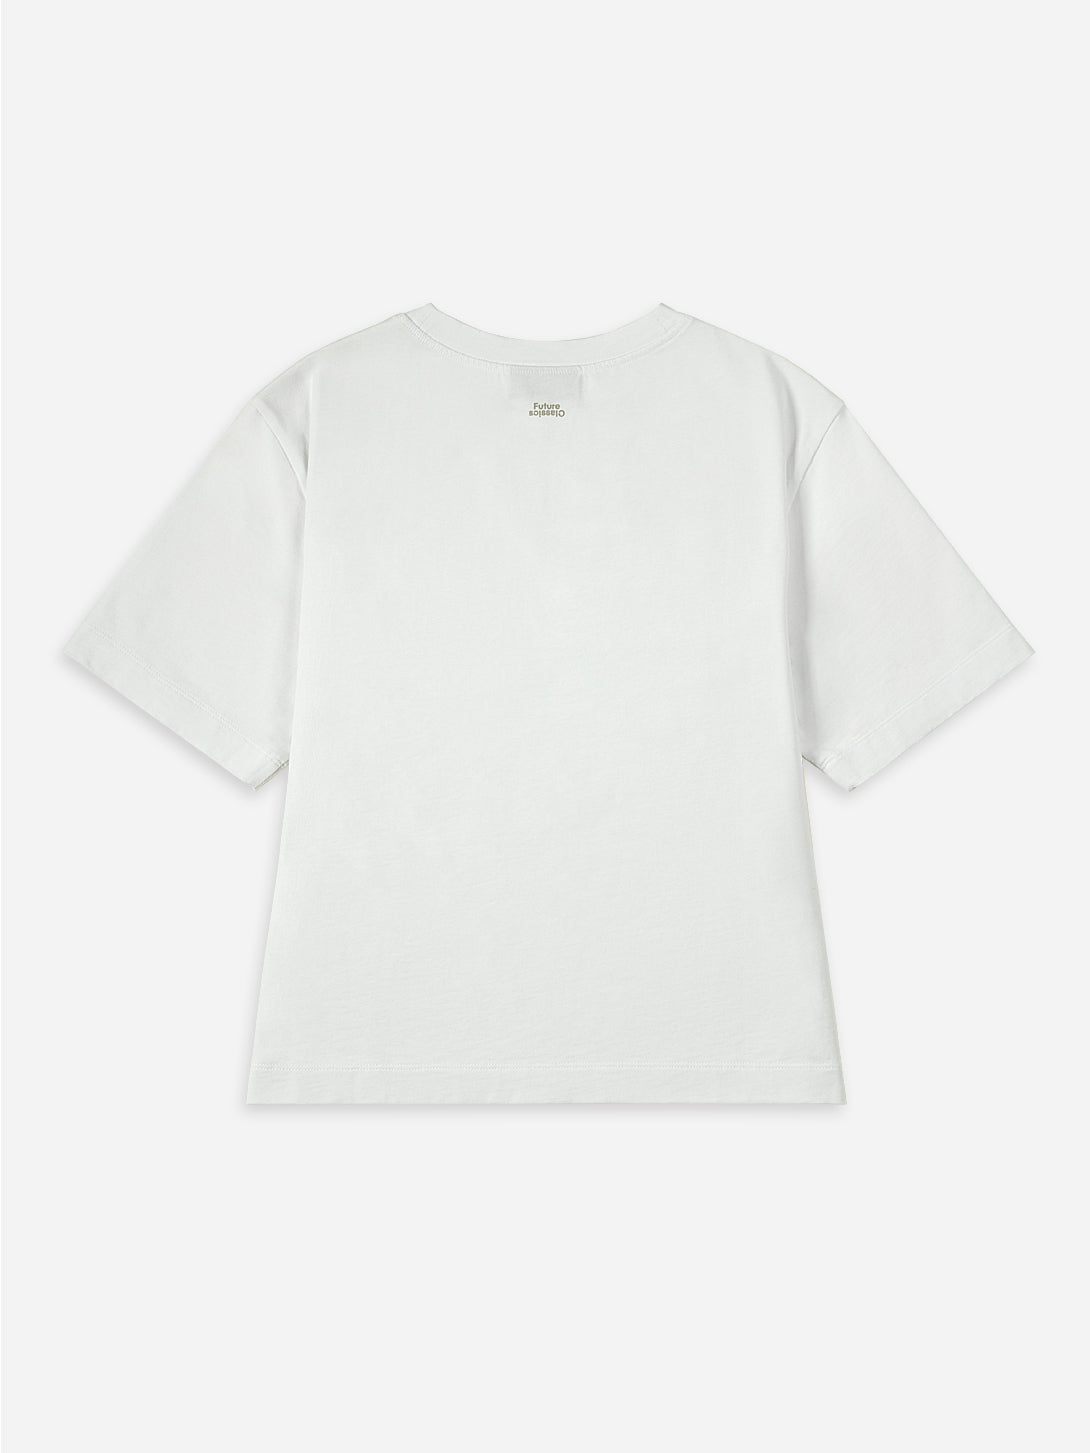 Pure White Nova Boxy Tee Relaxed Fit Shirt